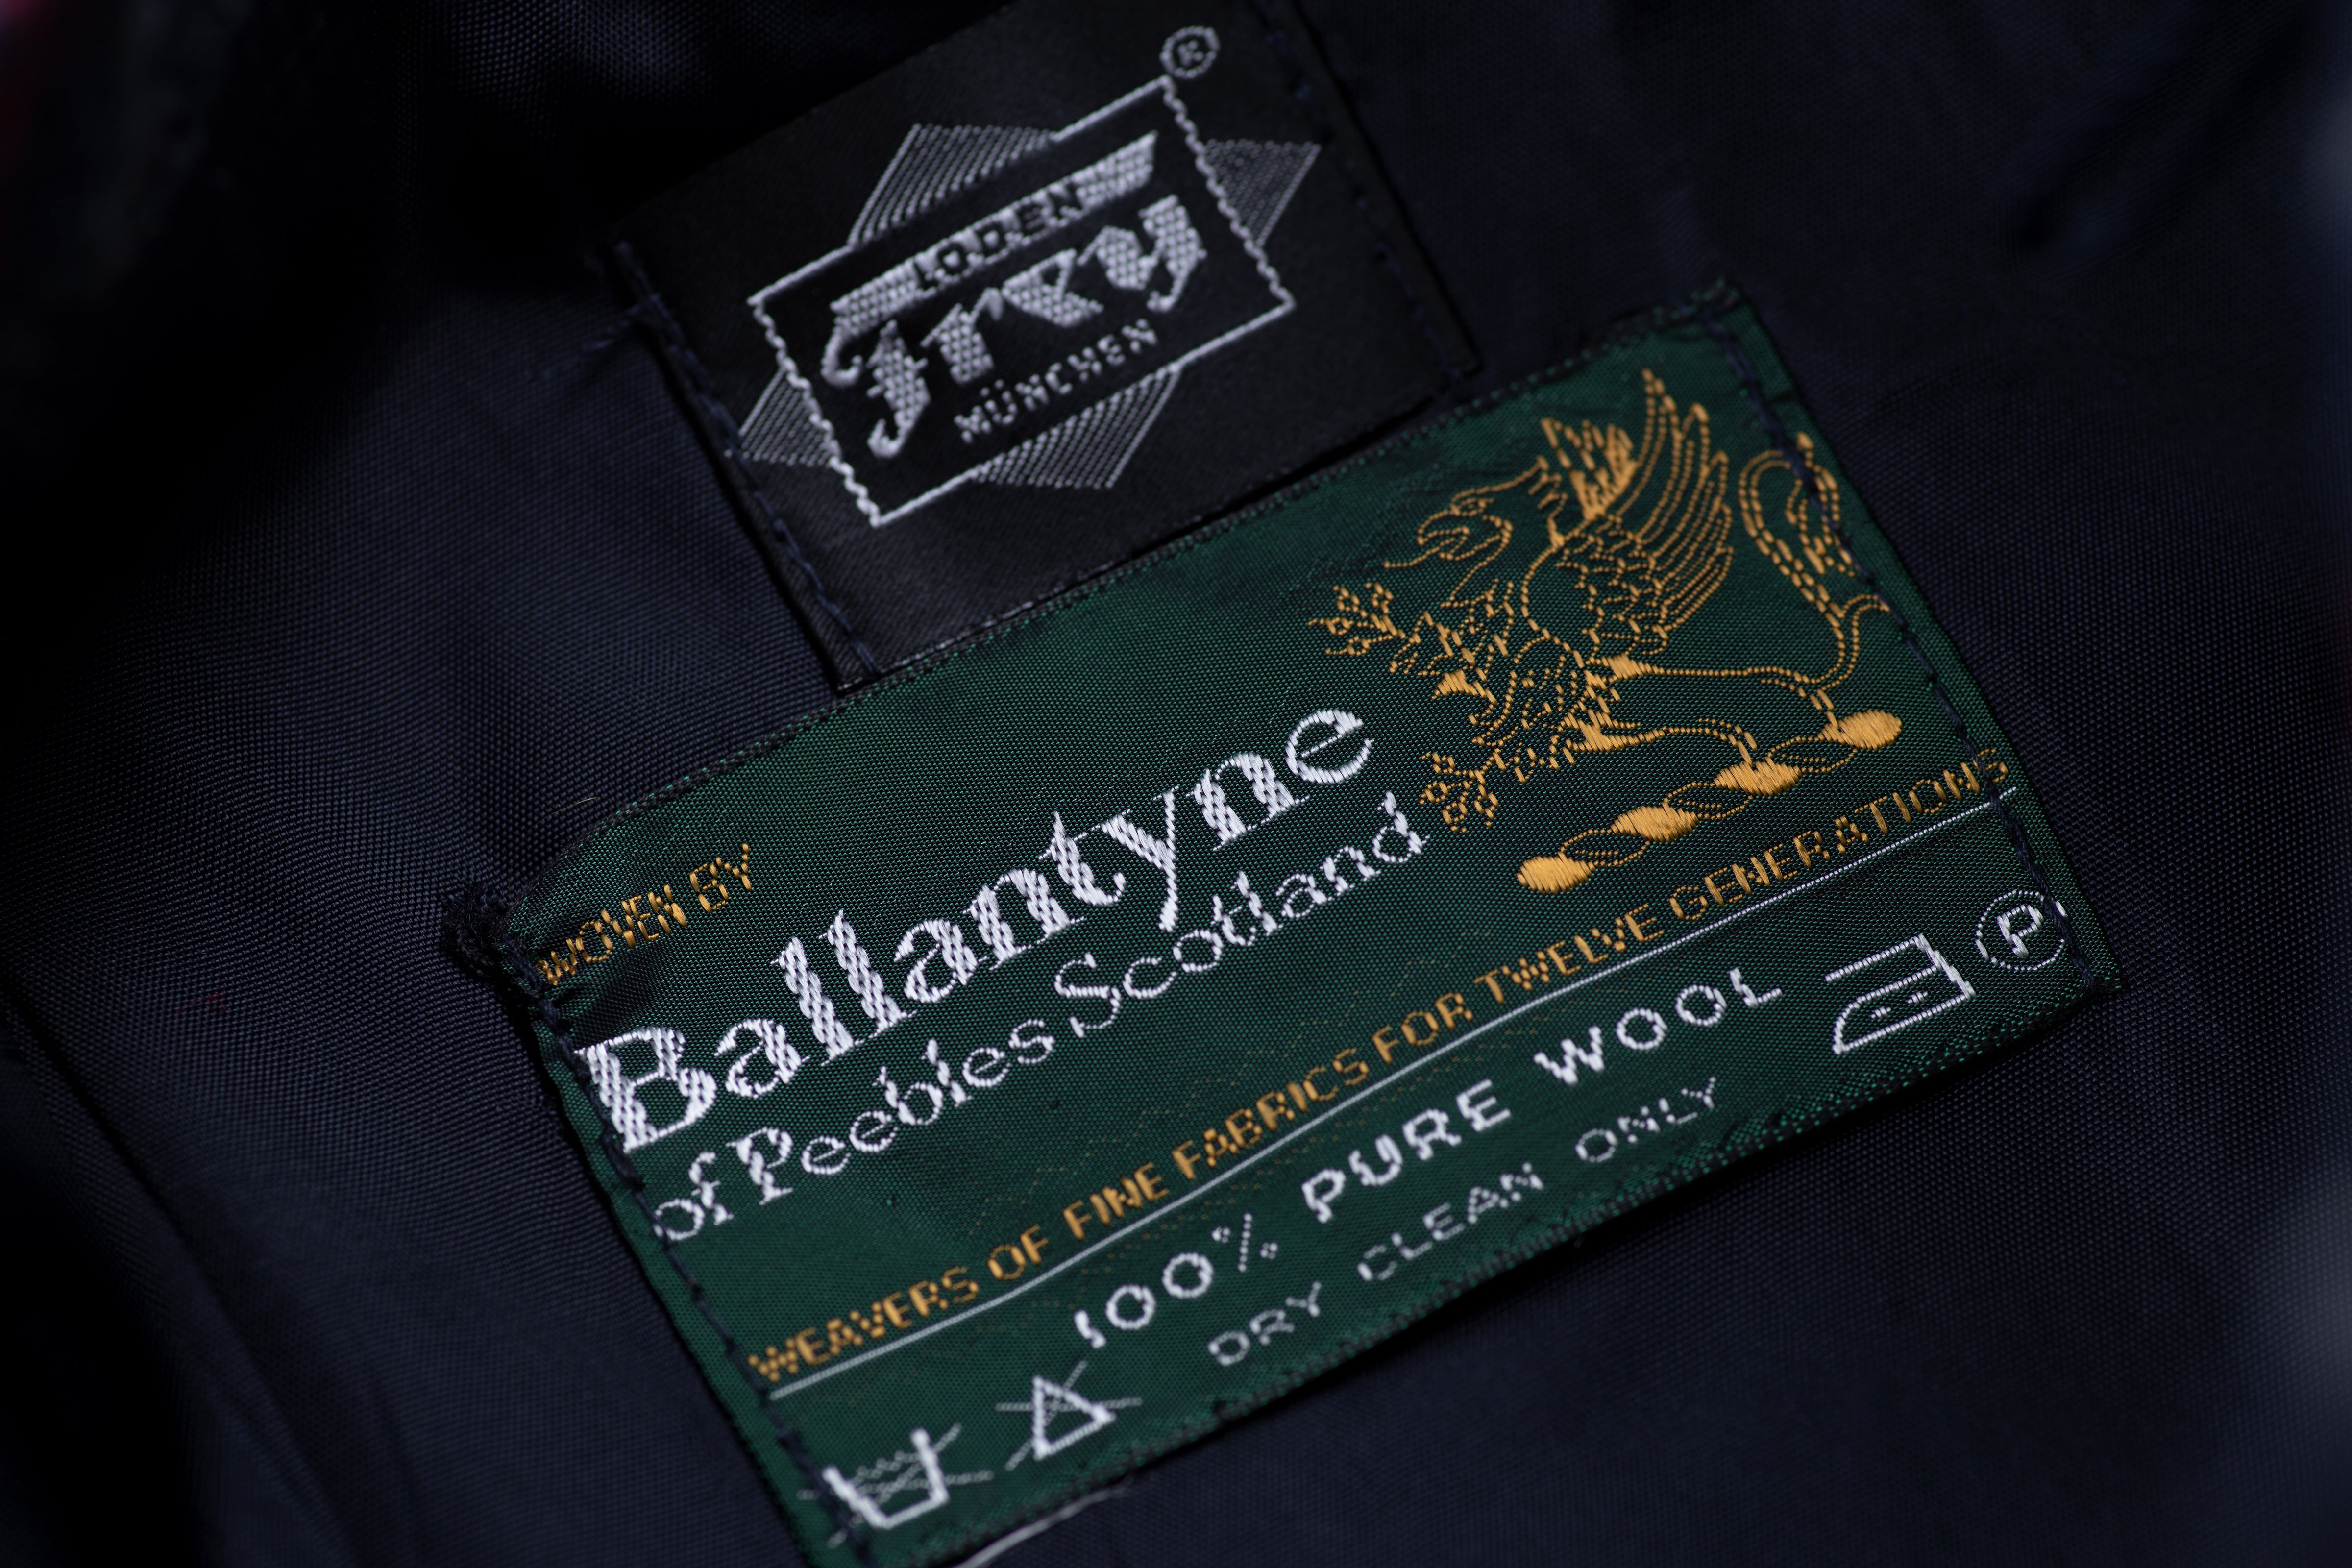 Ballantyne for Lodenfrey Vintage Tartan A-line Midi Skirt, SIZE M